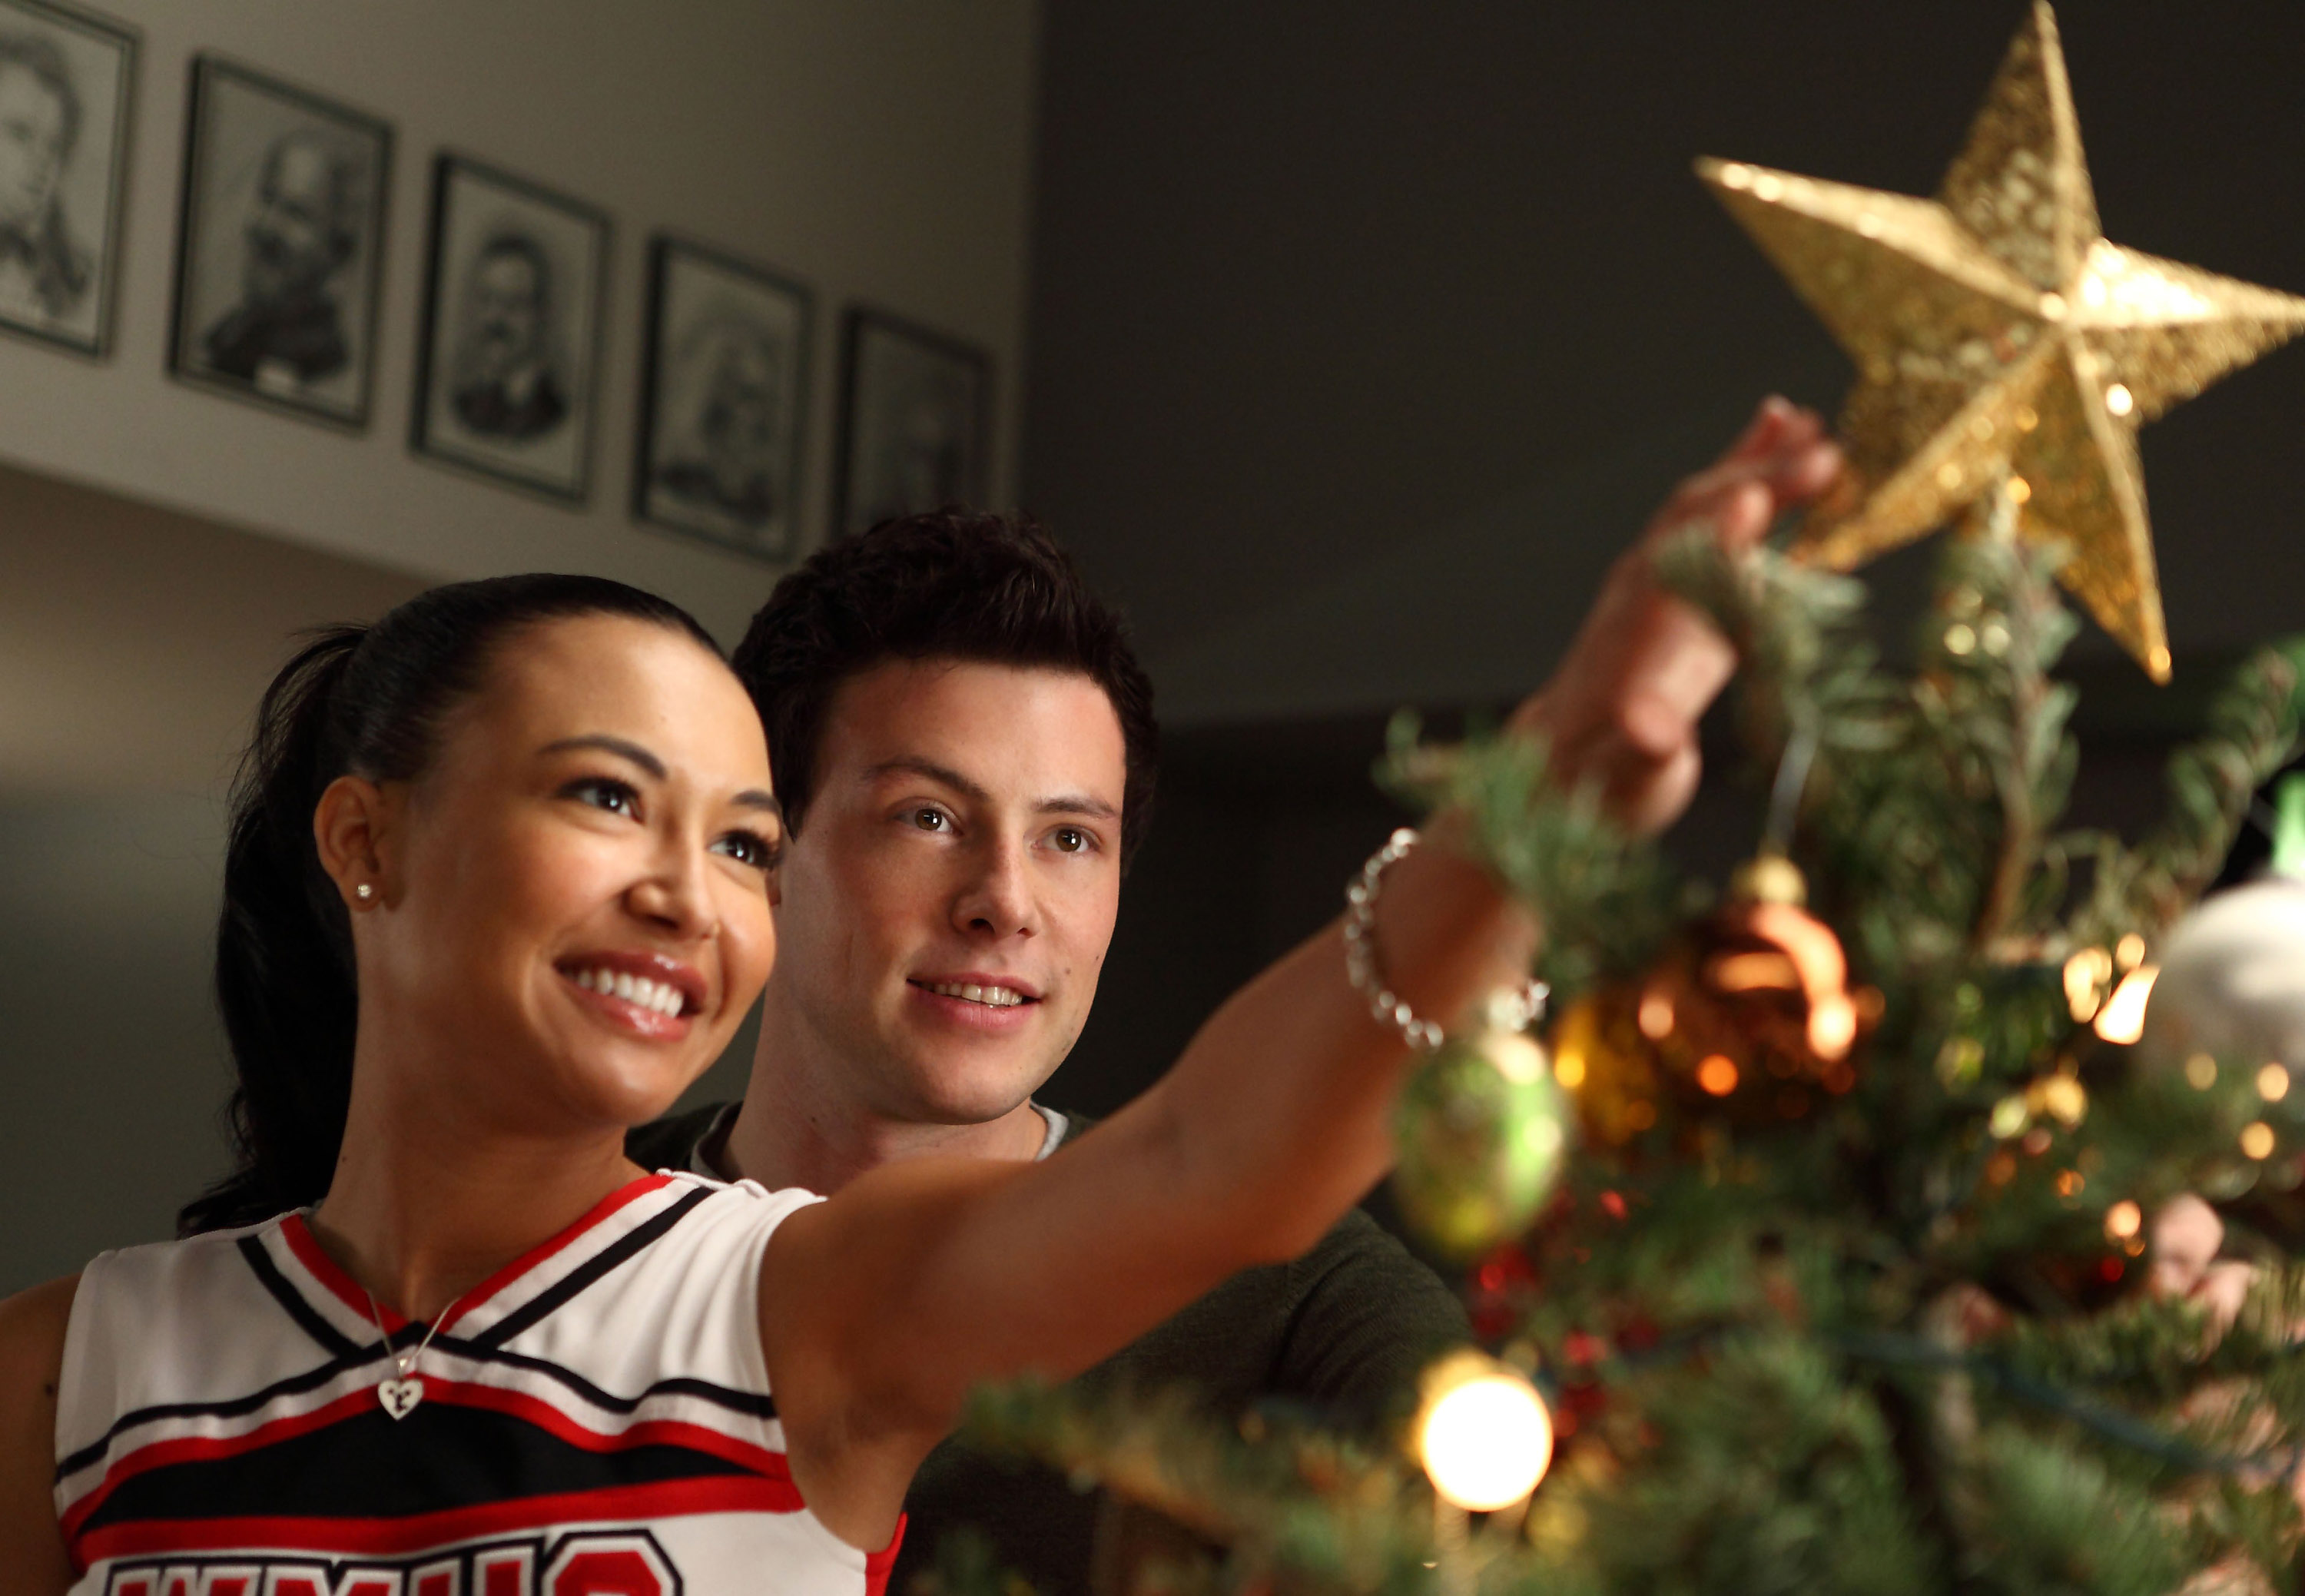 Naya Rivera as Santana Lopez and Cory Monteith as Finn Hudson in 'Glee' Season 2 Episode 10, 'A Very Glee Christmas.' Santana wears her red, black, and white cheerleading uniform. Finn wears a dark green sweater.